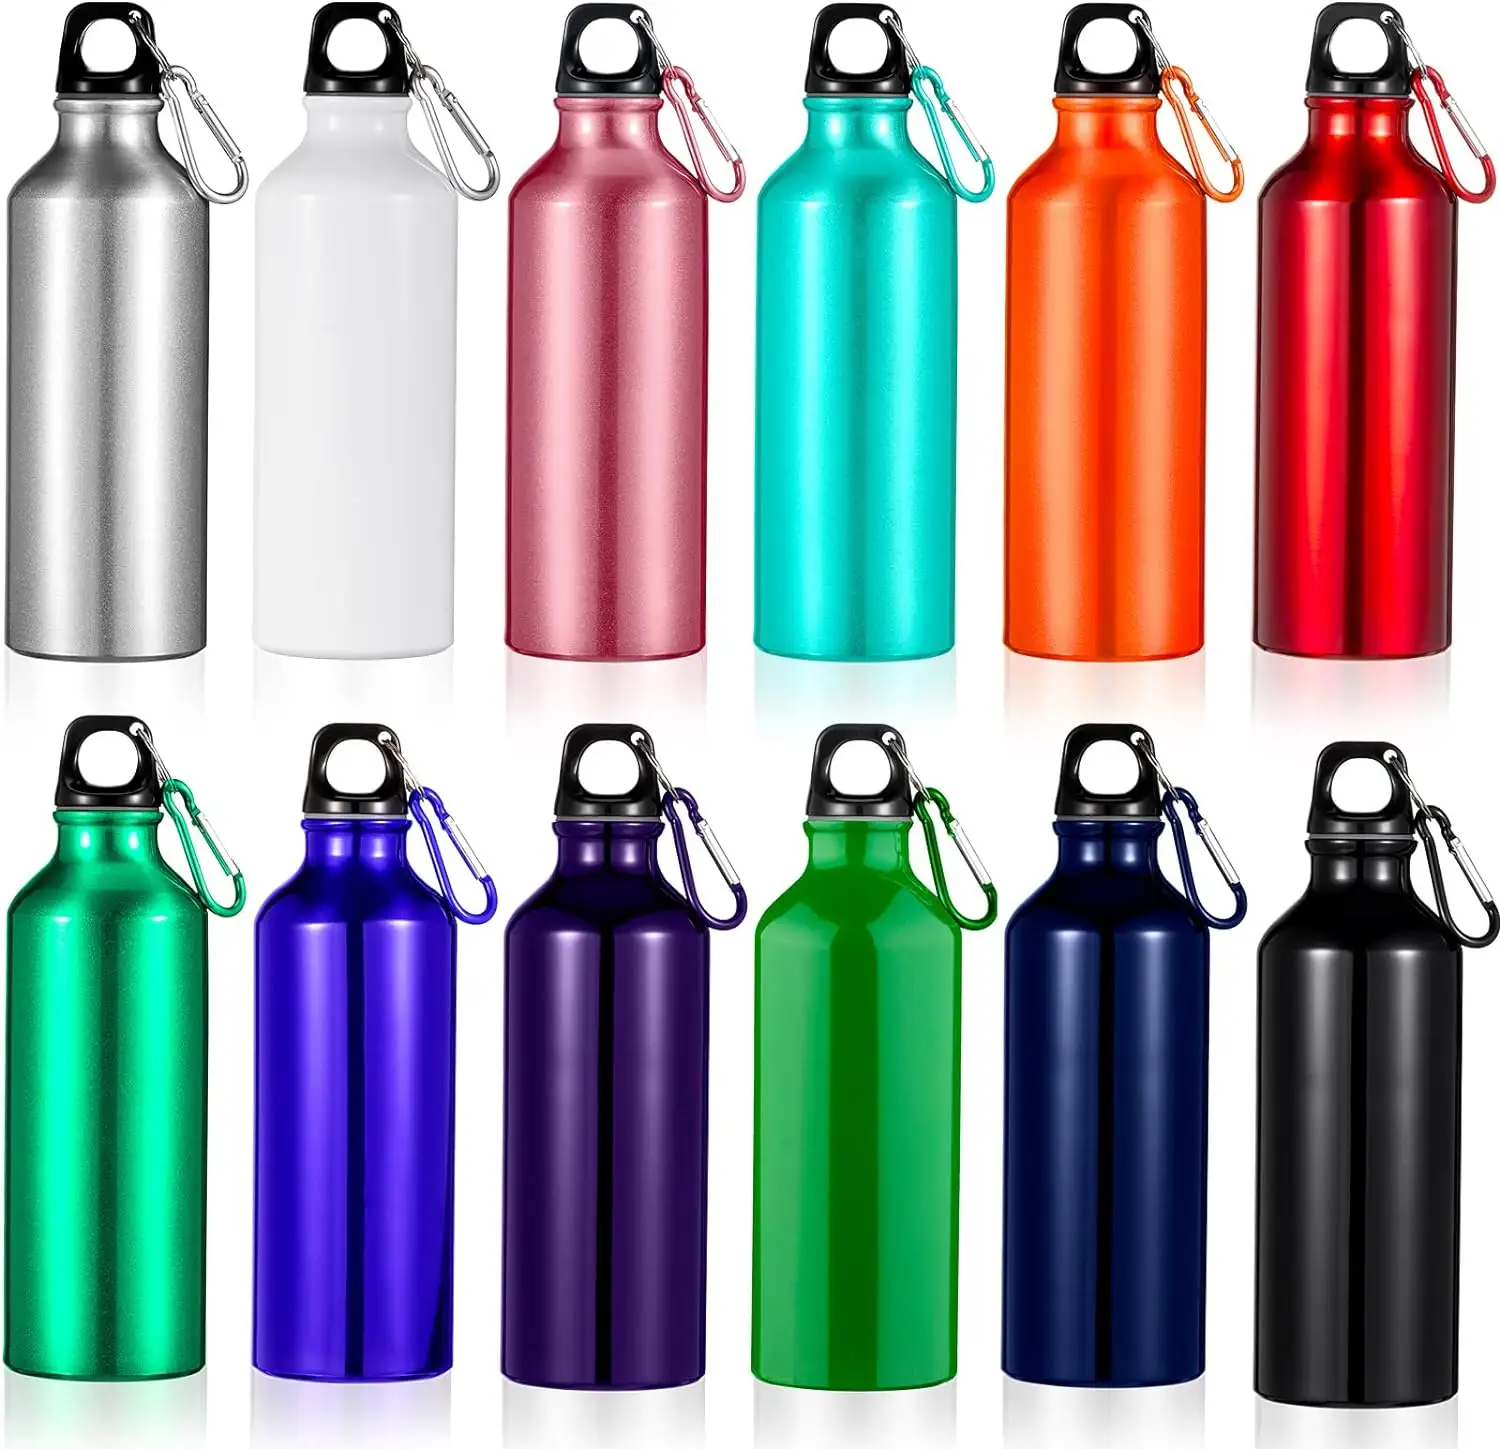 17 oz Aluminum Bike Water Bottle Backpacking Reusable Sports Bottle Leak Proof Travel Bottles with Buckle and Twist Cap